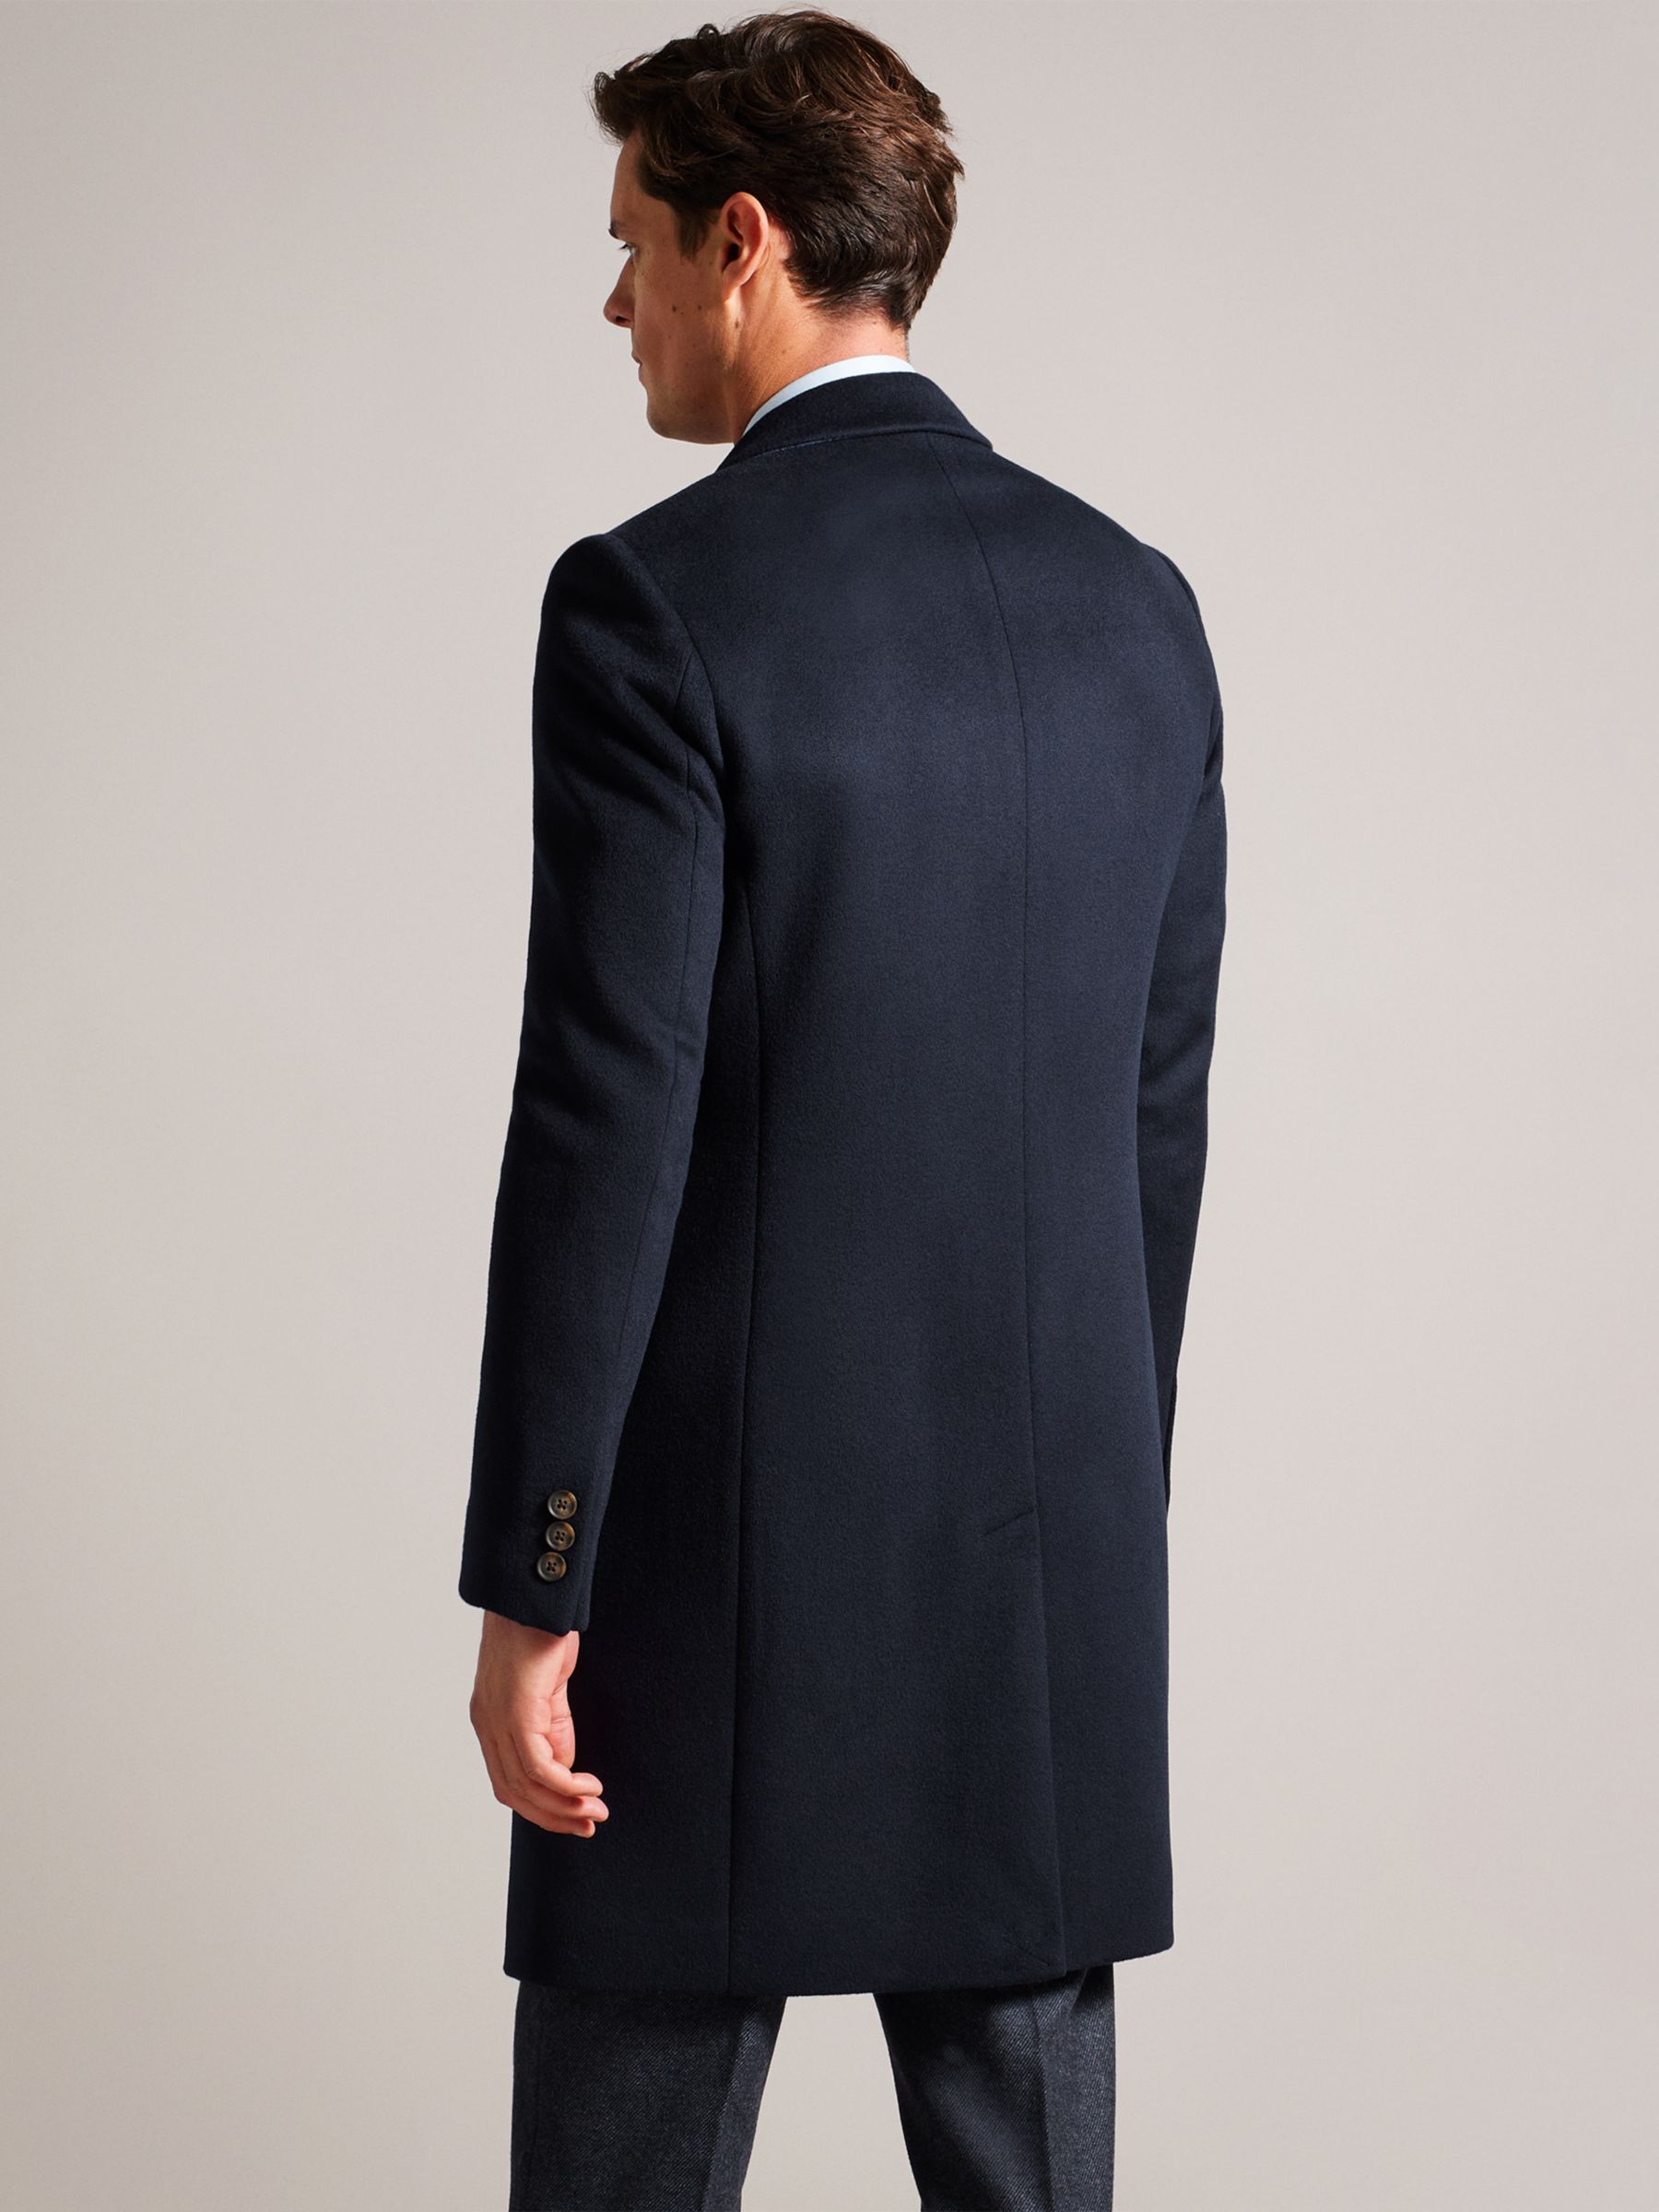 Ted Baker Rueby Wool Blend City Coat, Blue Navy at John Lewis & Partners